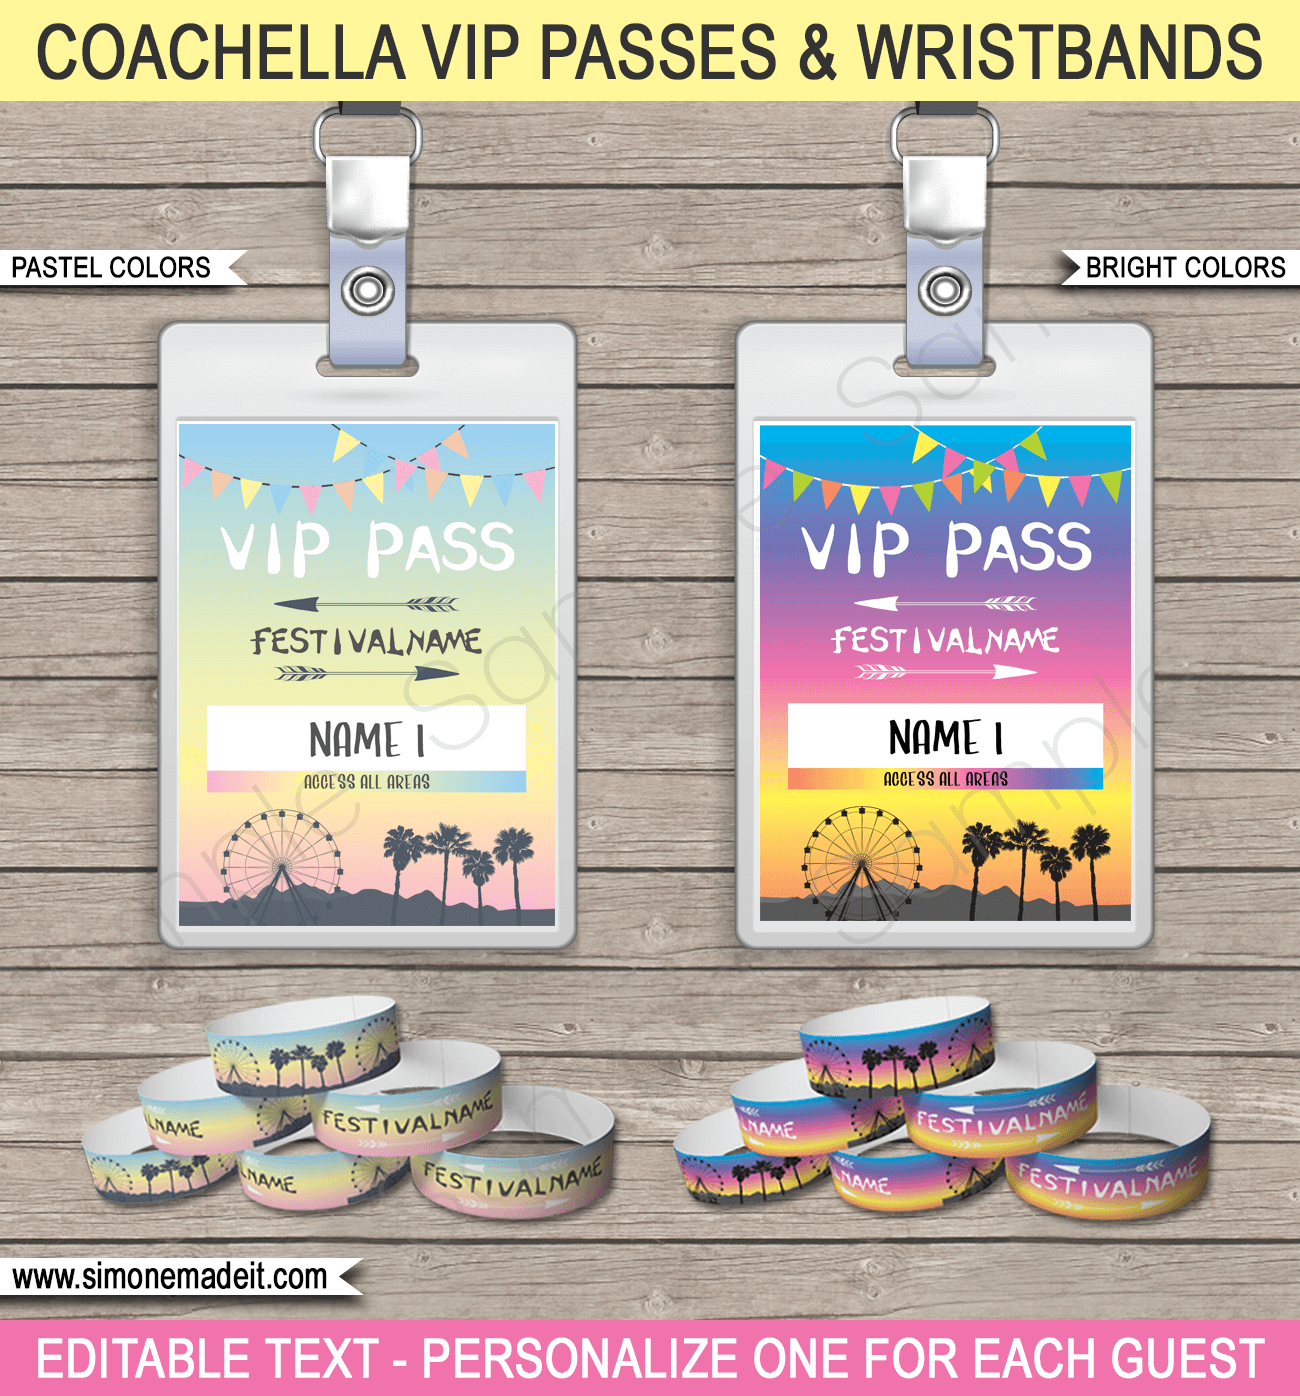 Coachella Birthday Party VIP Passes & Wristbands | Editable &amp; Printable Templates | Coachella Themed | Coachella Inspired | Music Festival | Personalized VIP Passes & Wristbands